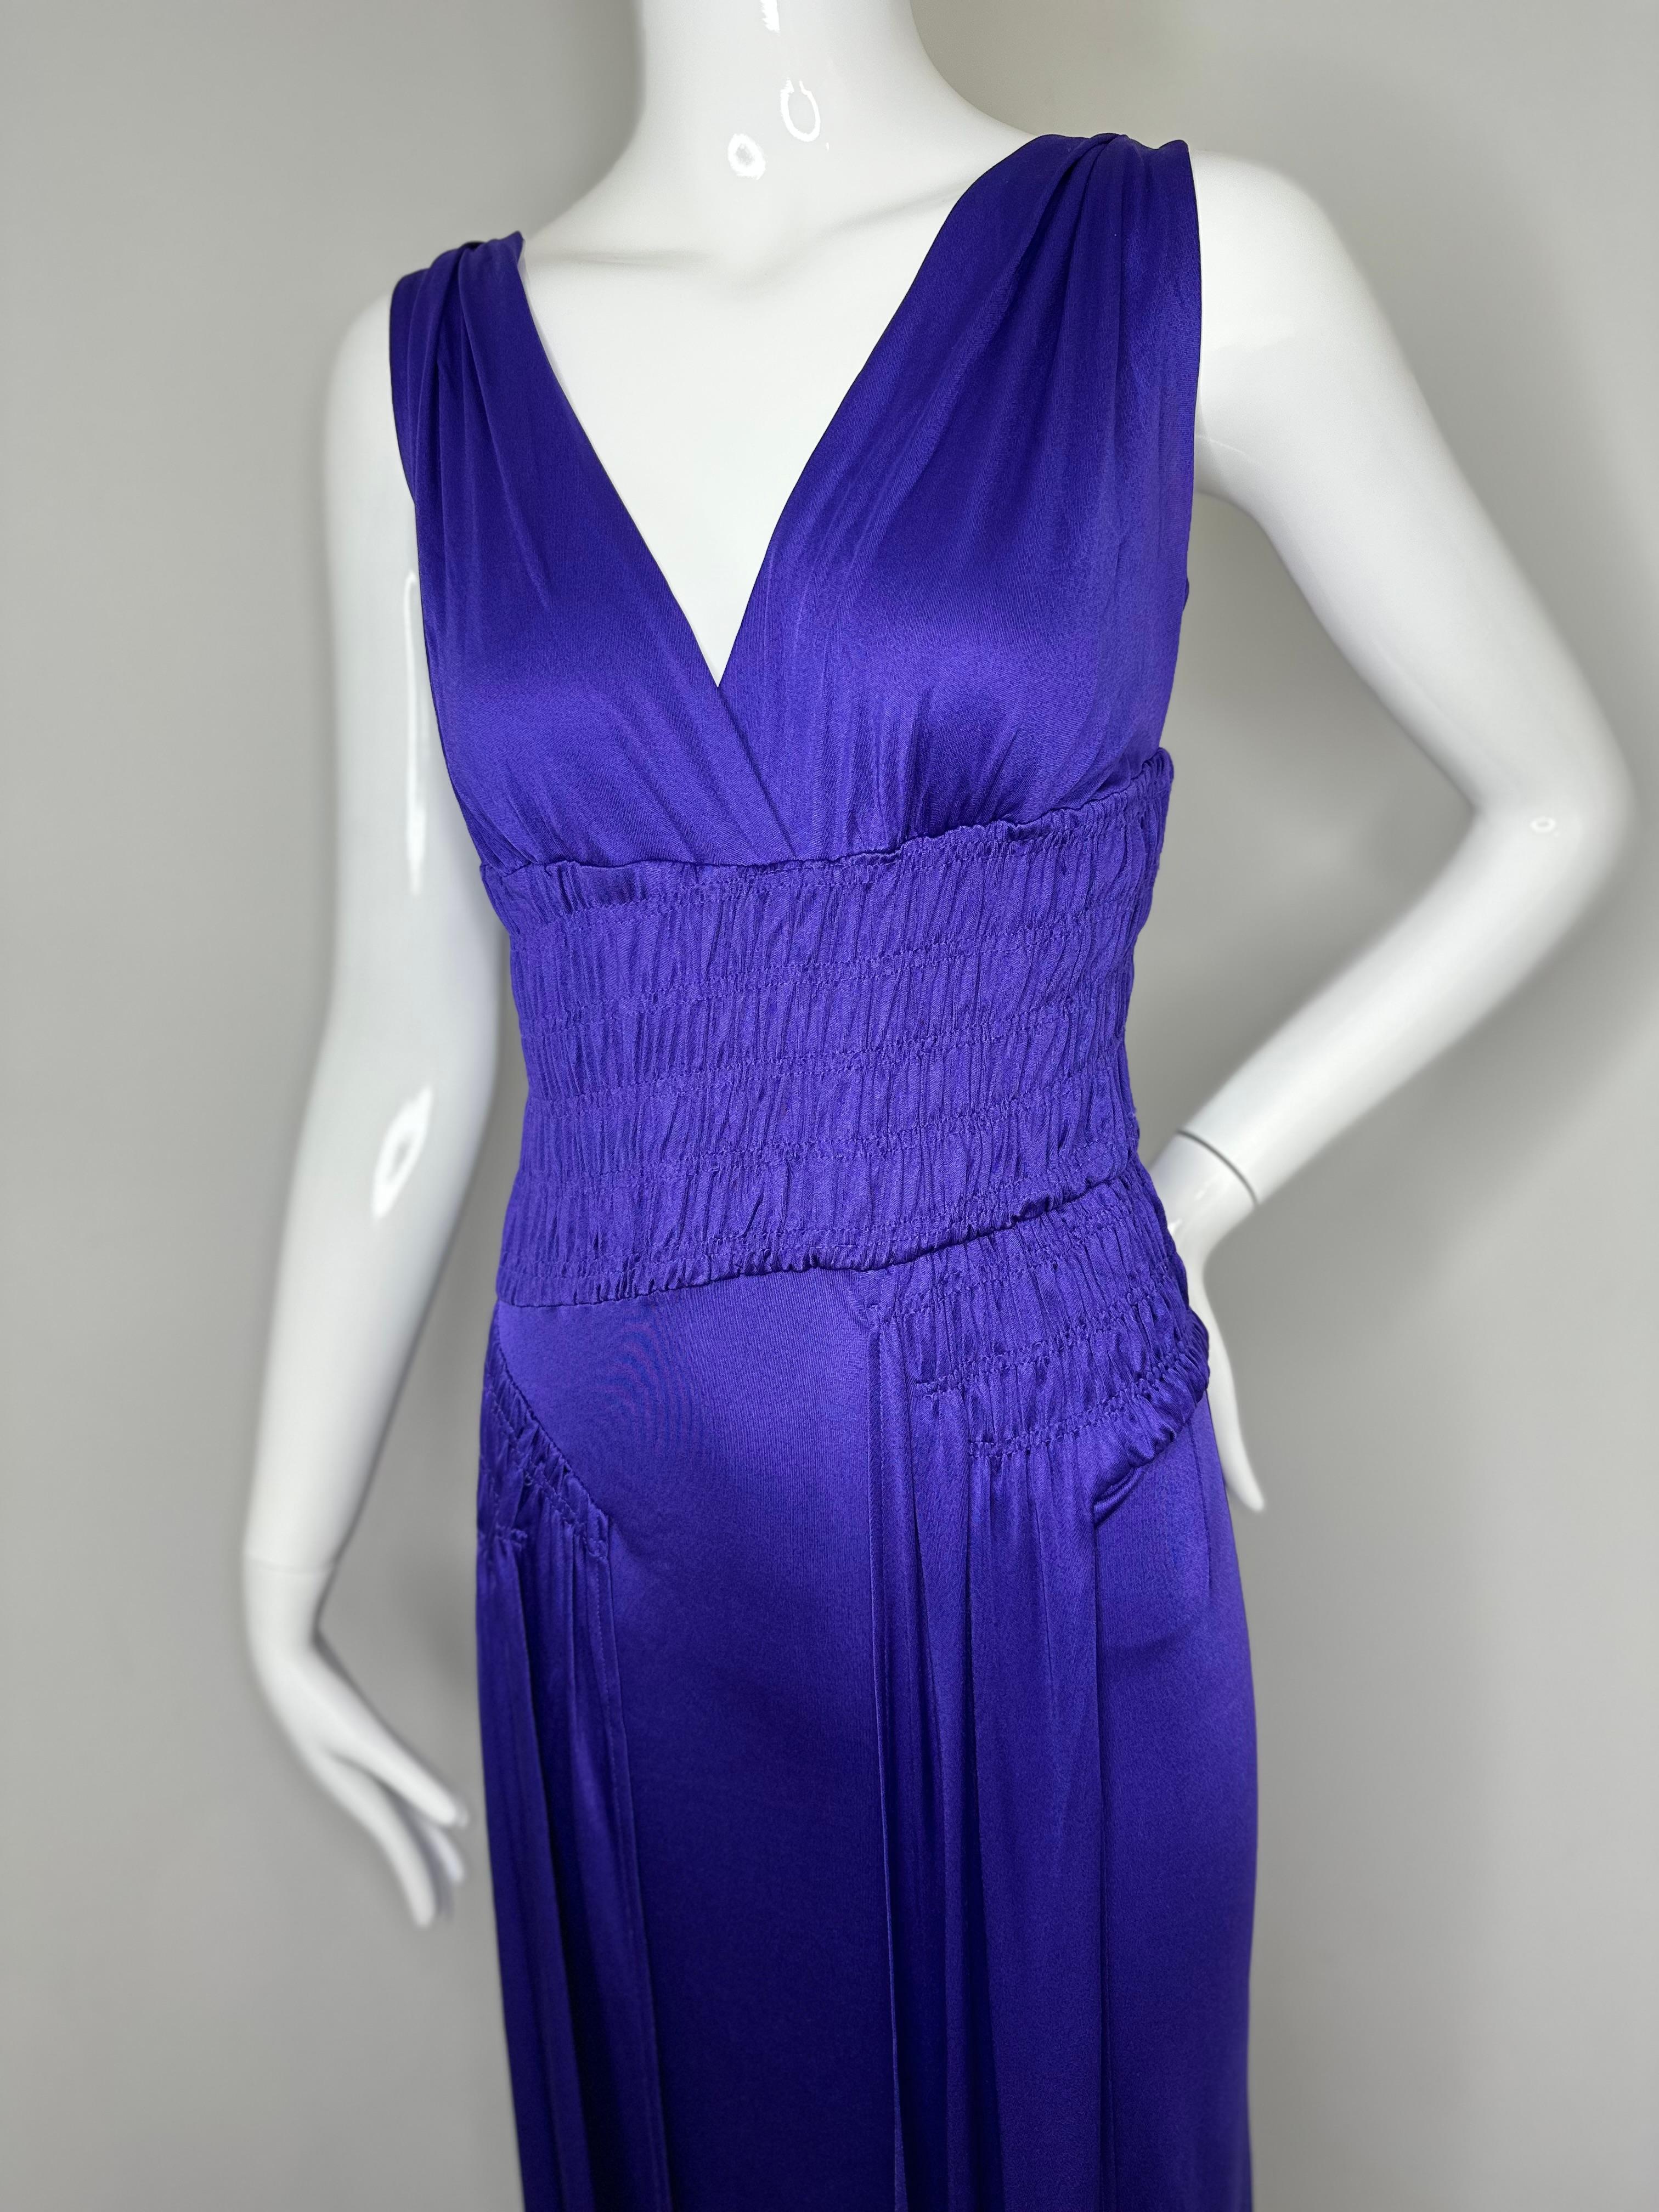 Christian Dior by John Galliano 2009 purple maxi dress 1